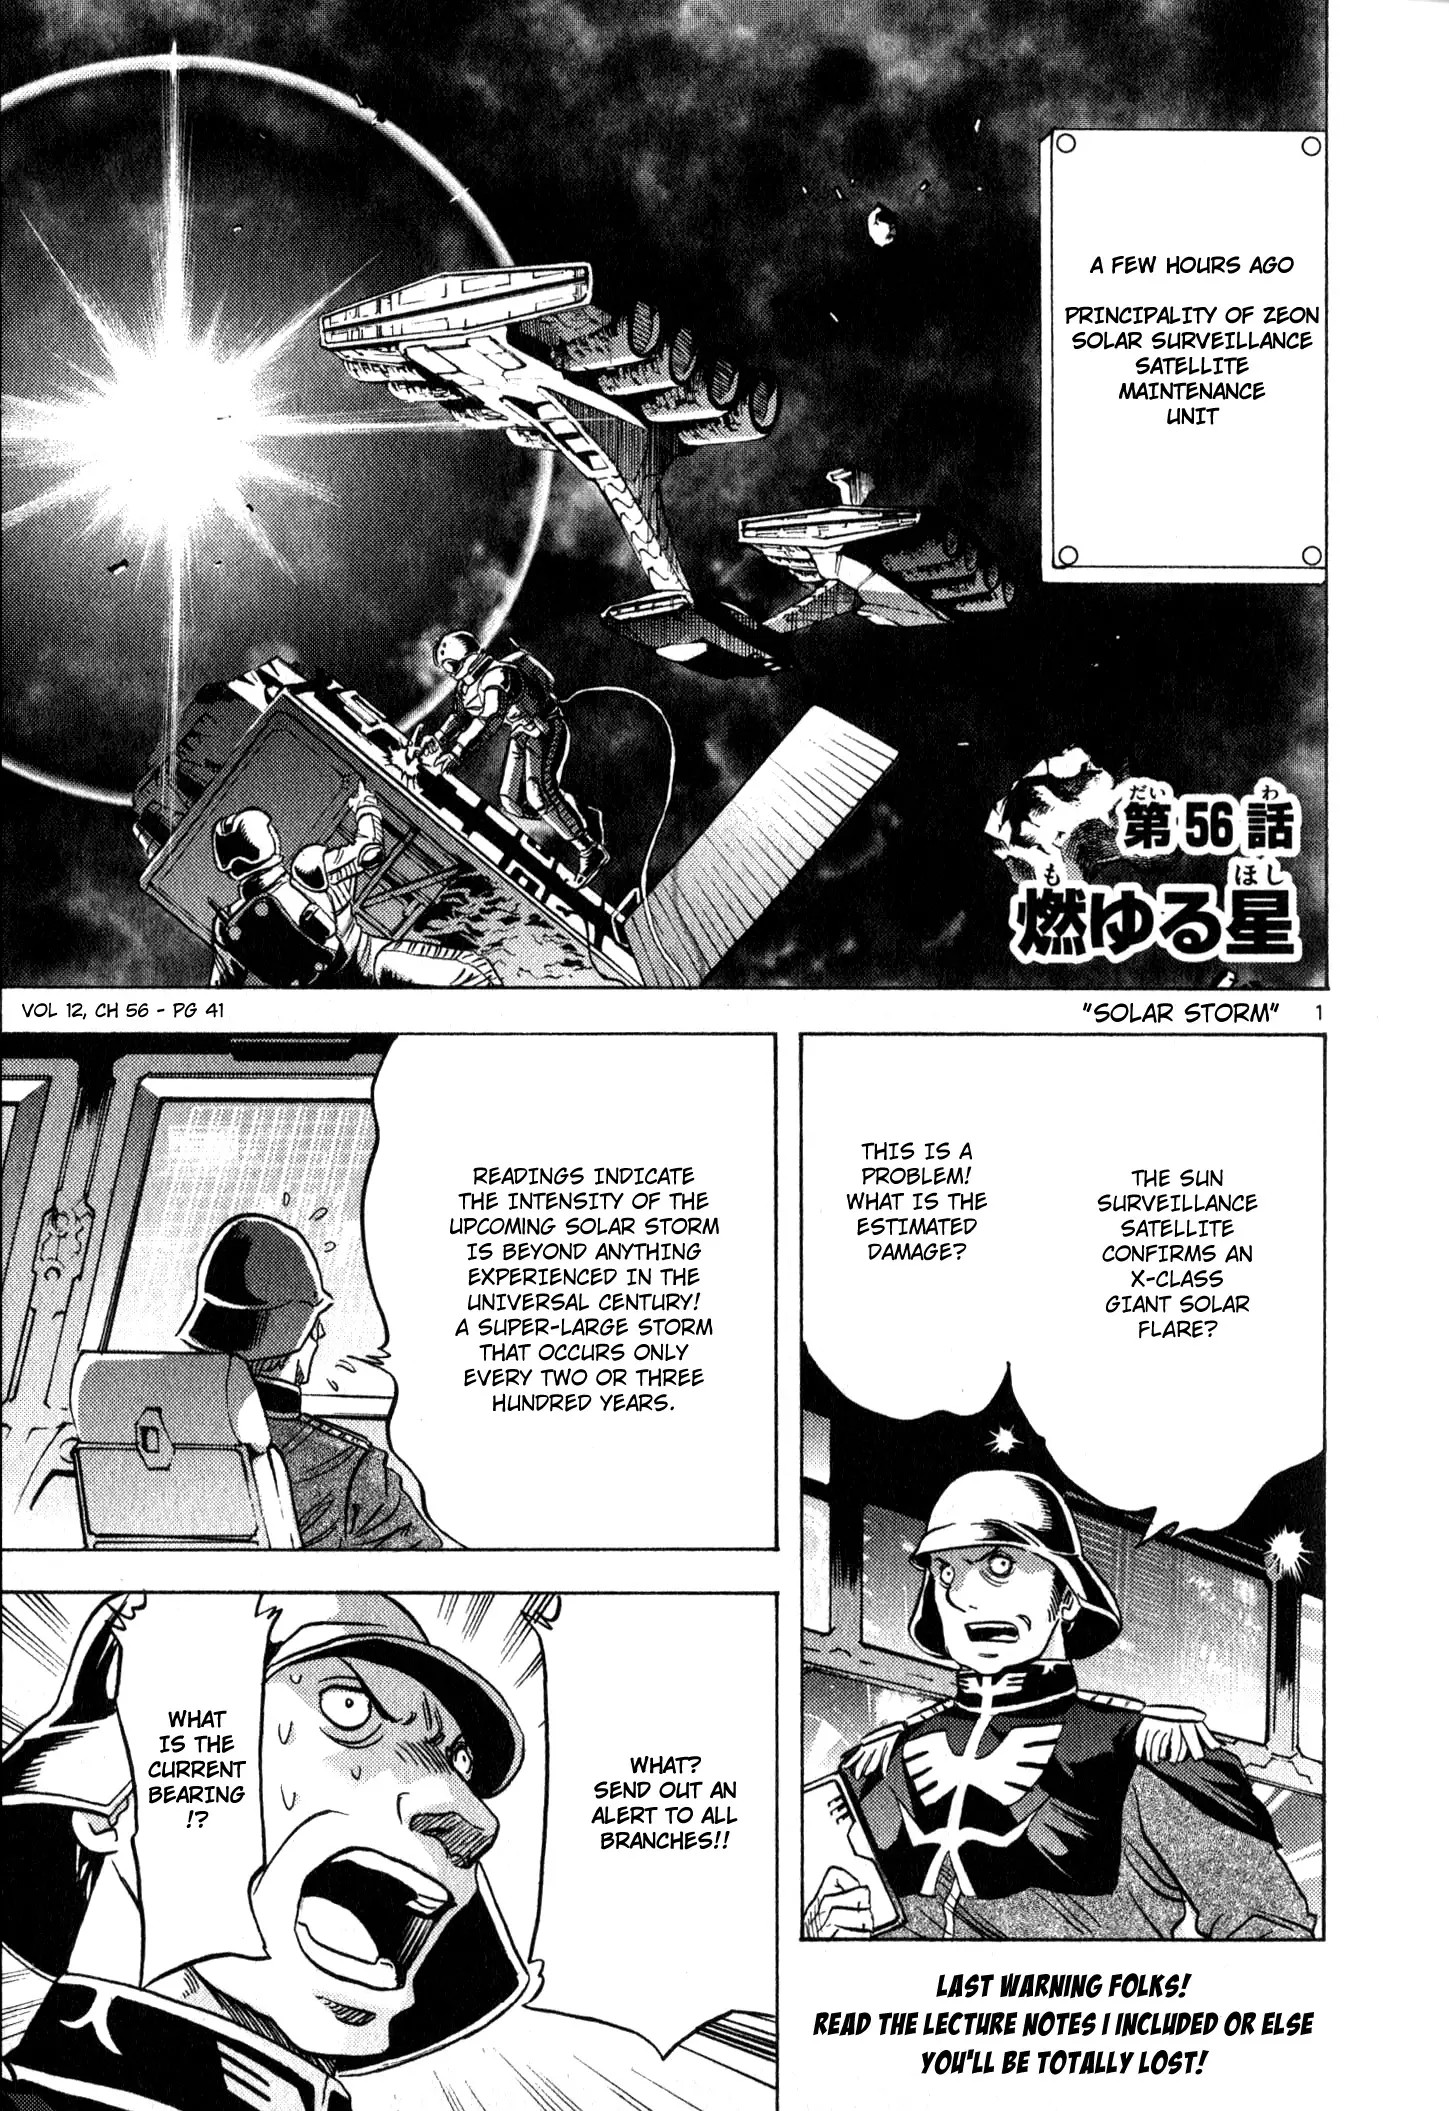 Mobile Suit Gundam Aggressor - 56 page 4-8883e70e